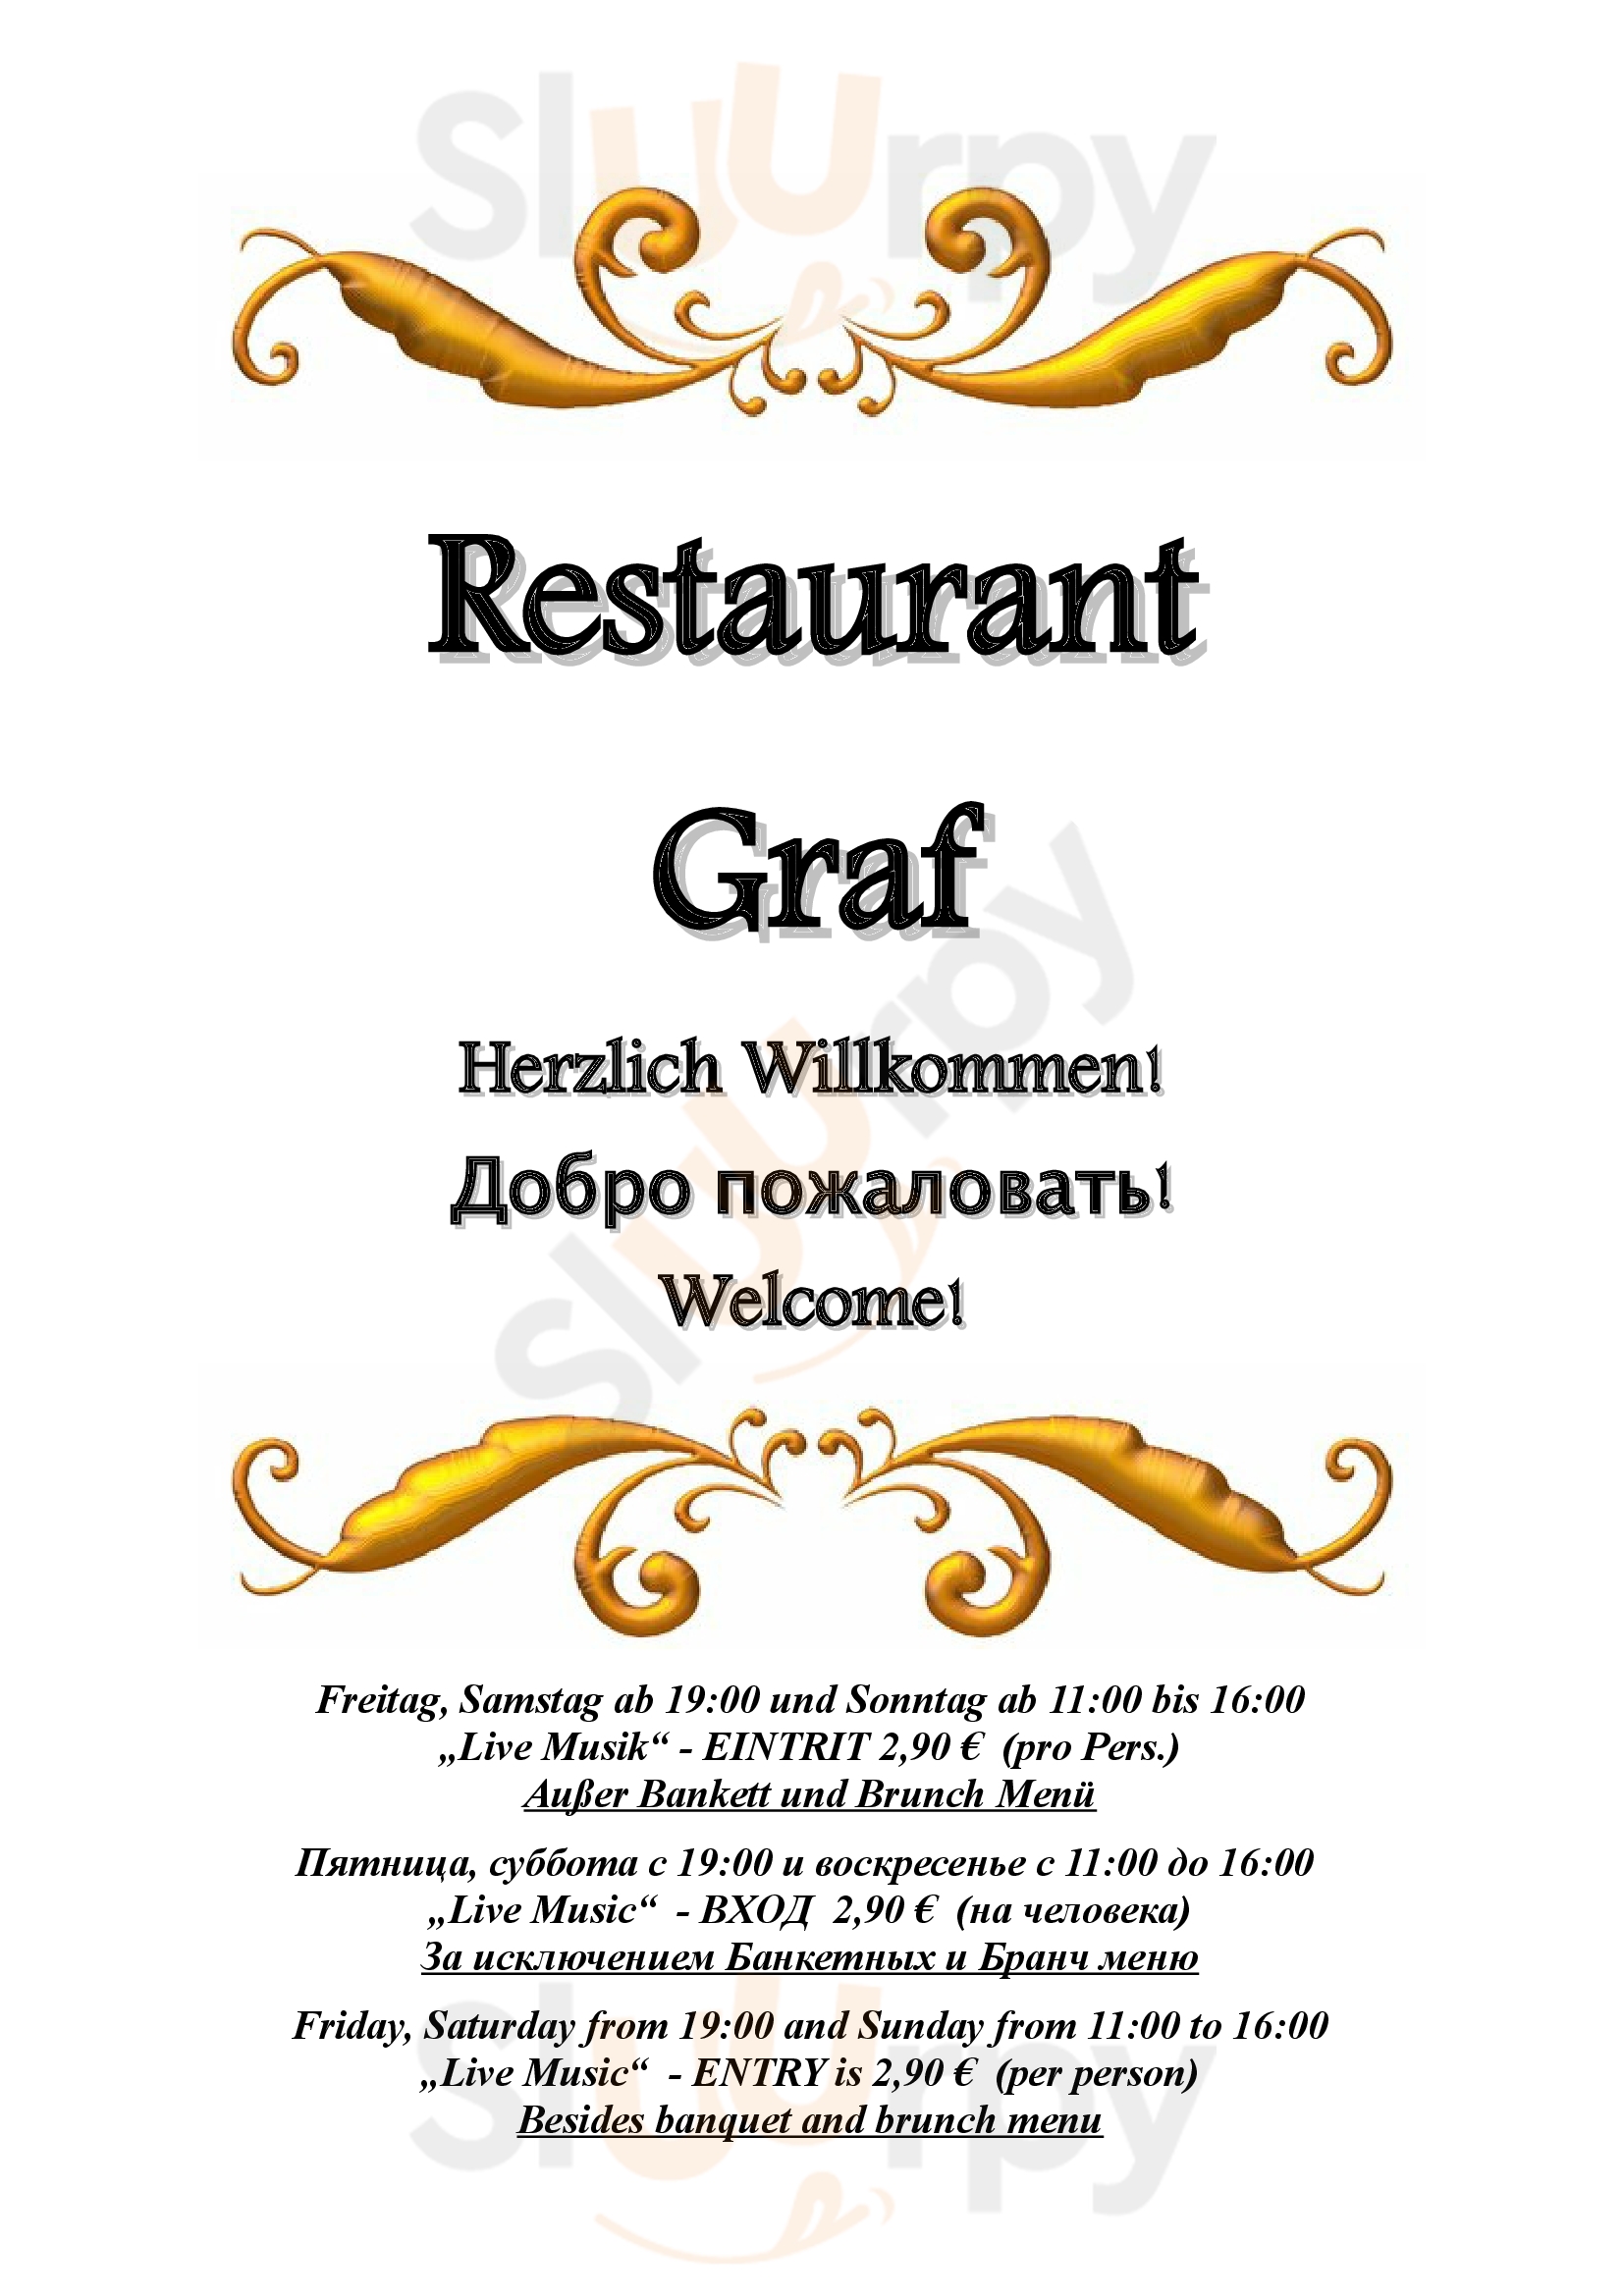 Restaurant Graf Berlin Menu - 1